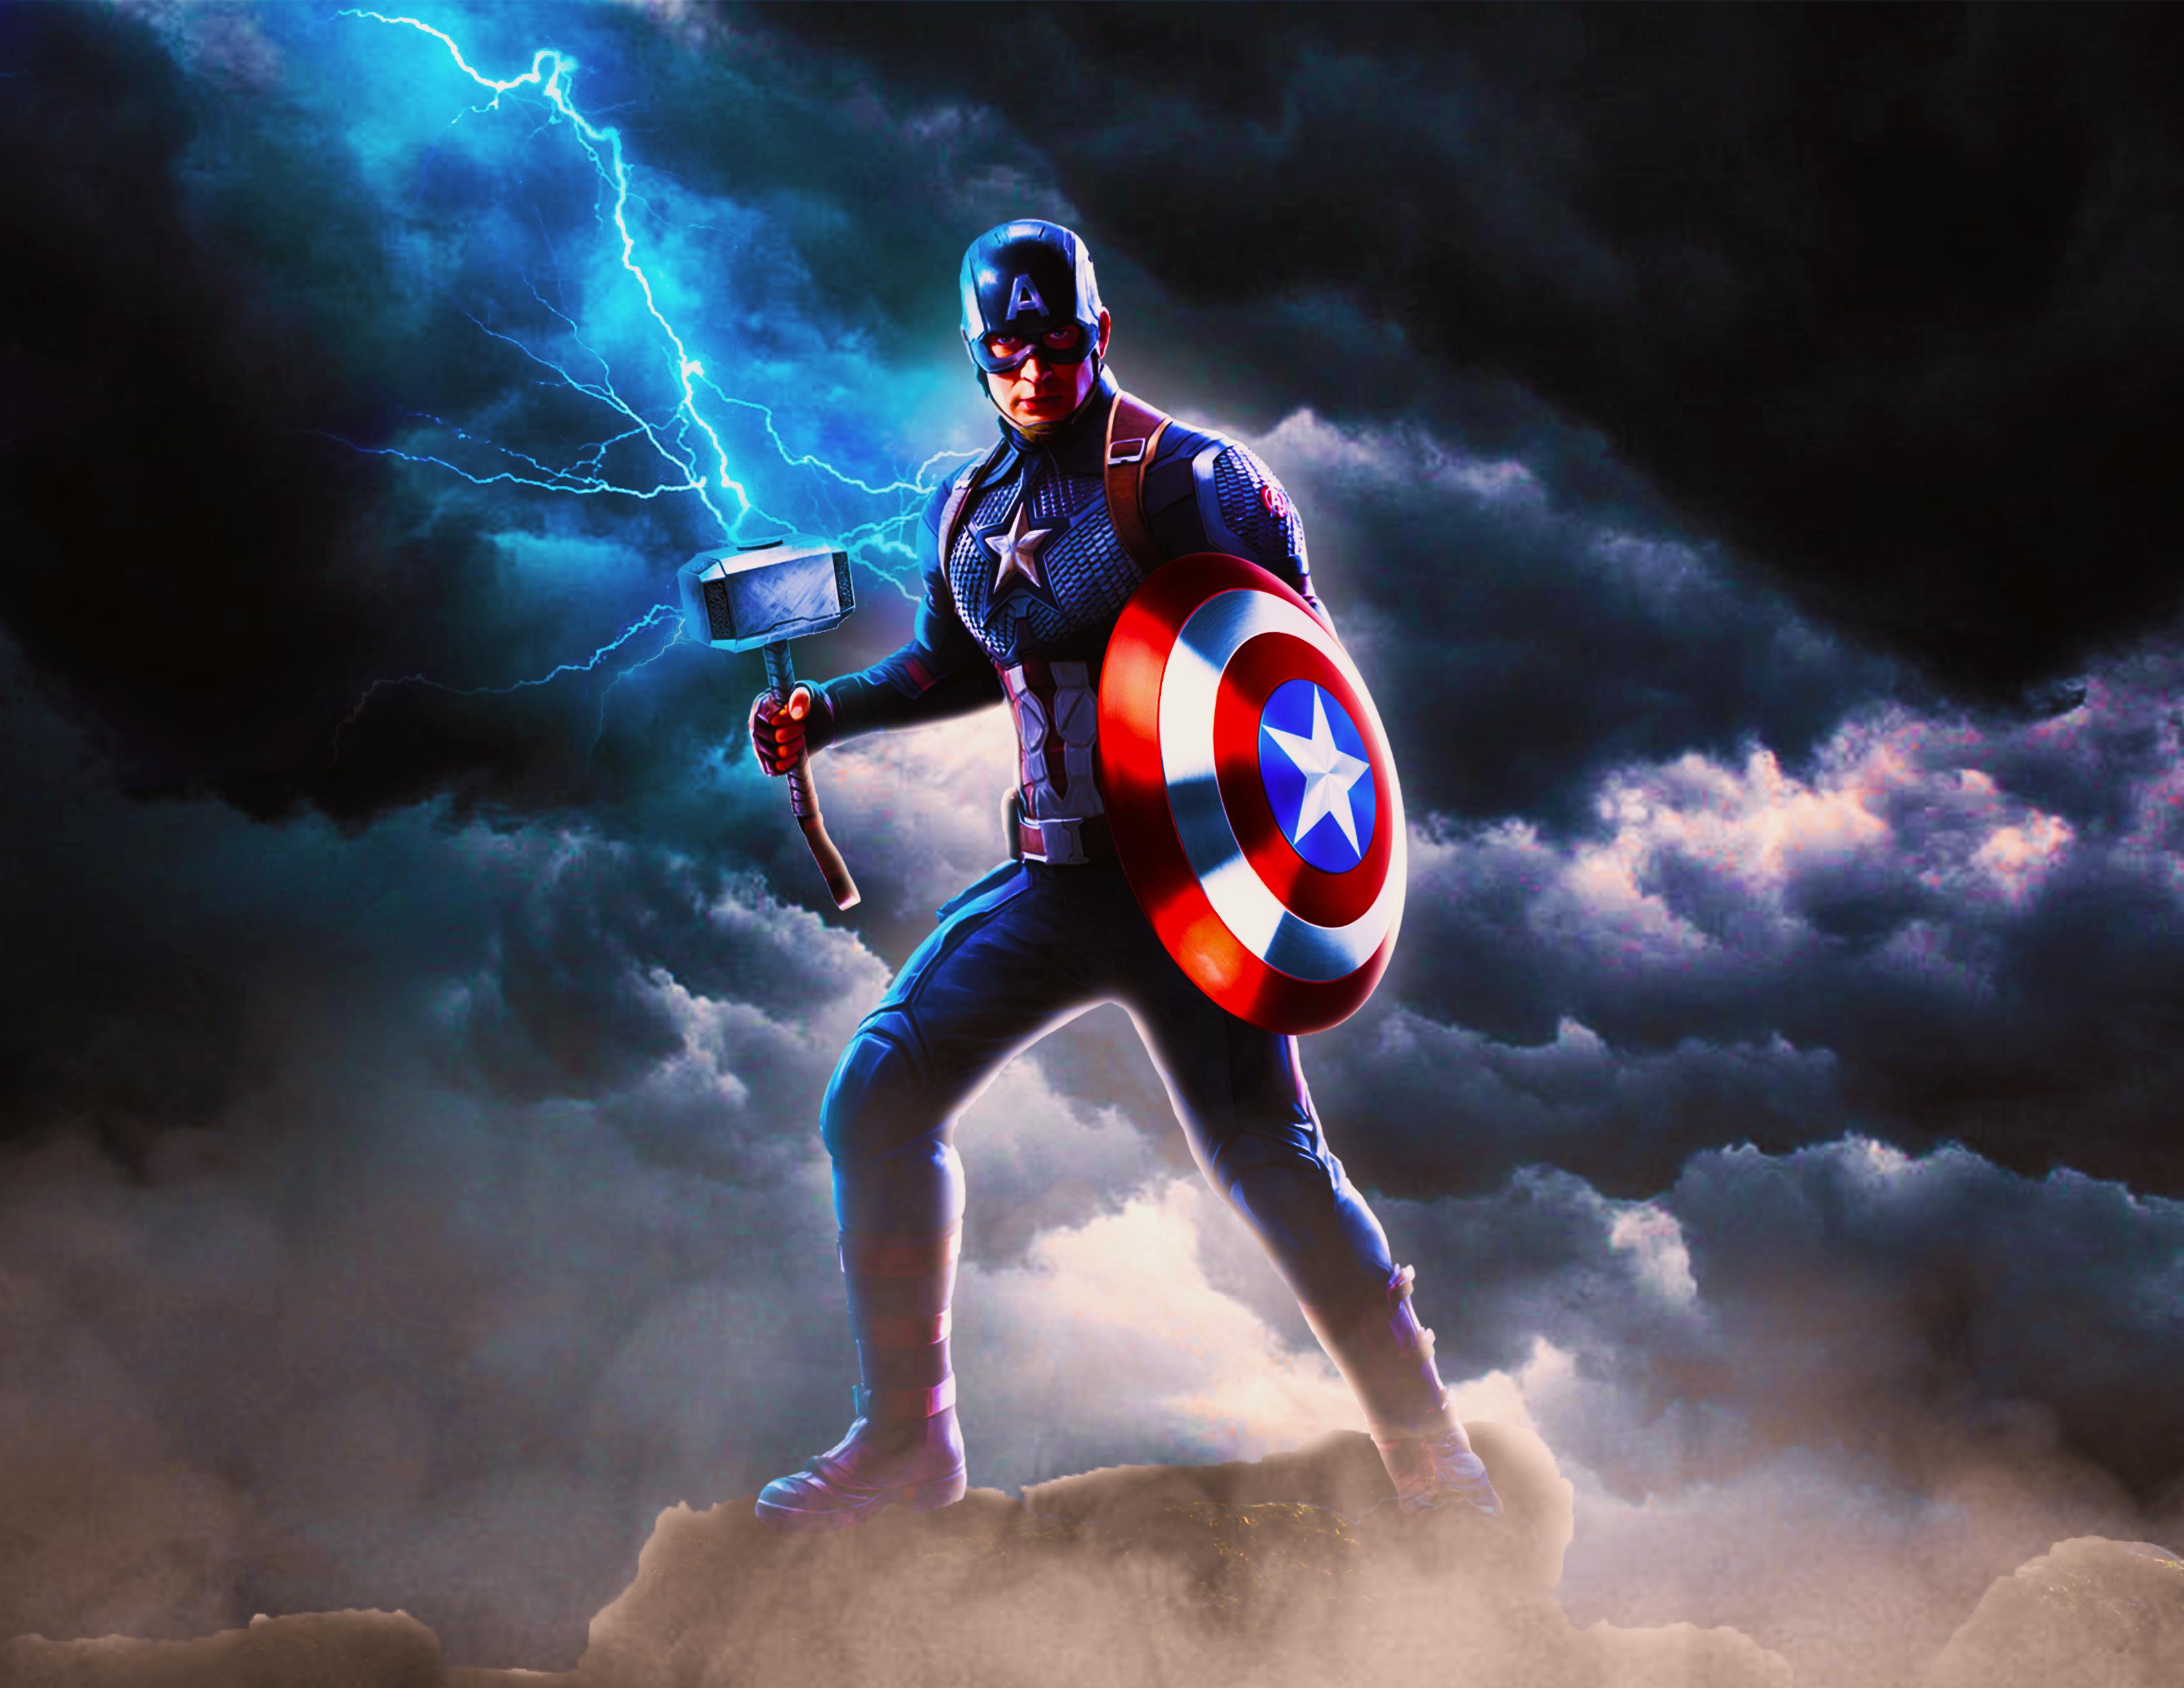 Endgame Captain America wallpaper. I hope you like it!